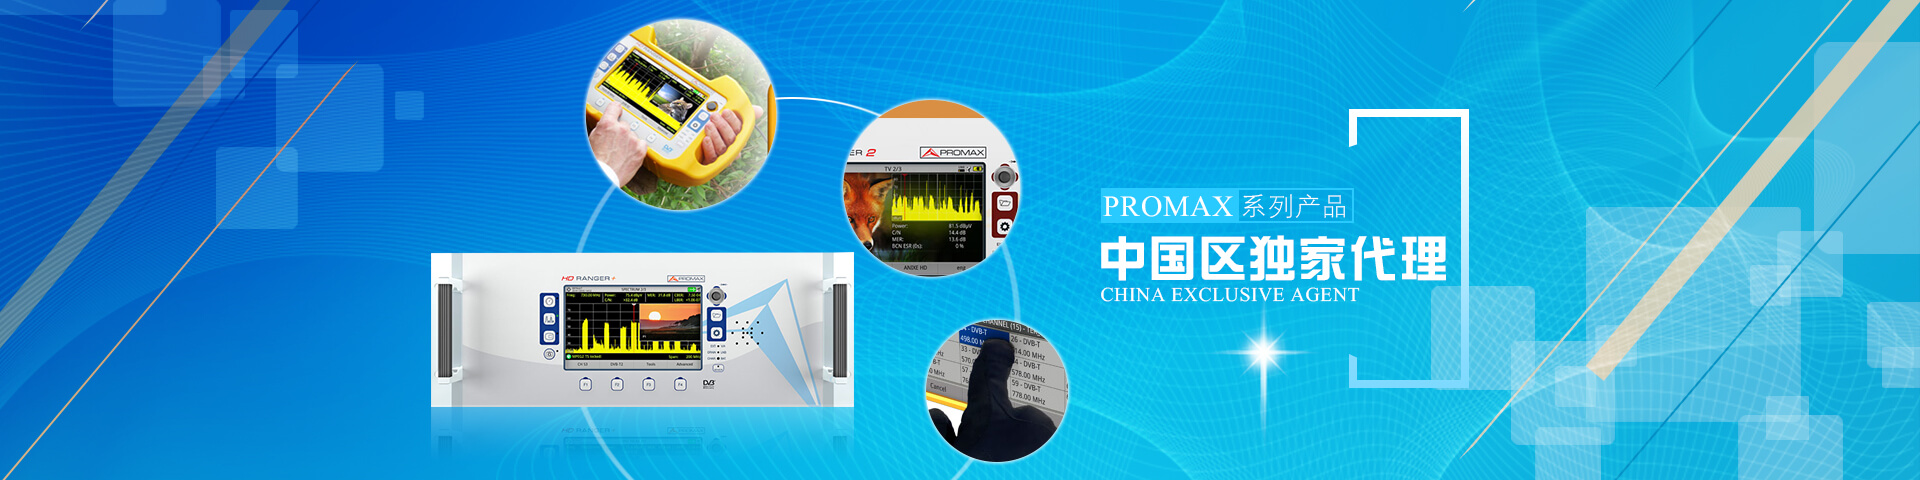 PROMAX系列产品中国区独家代理